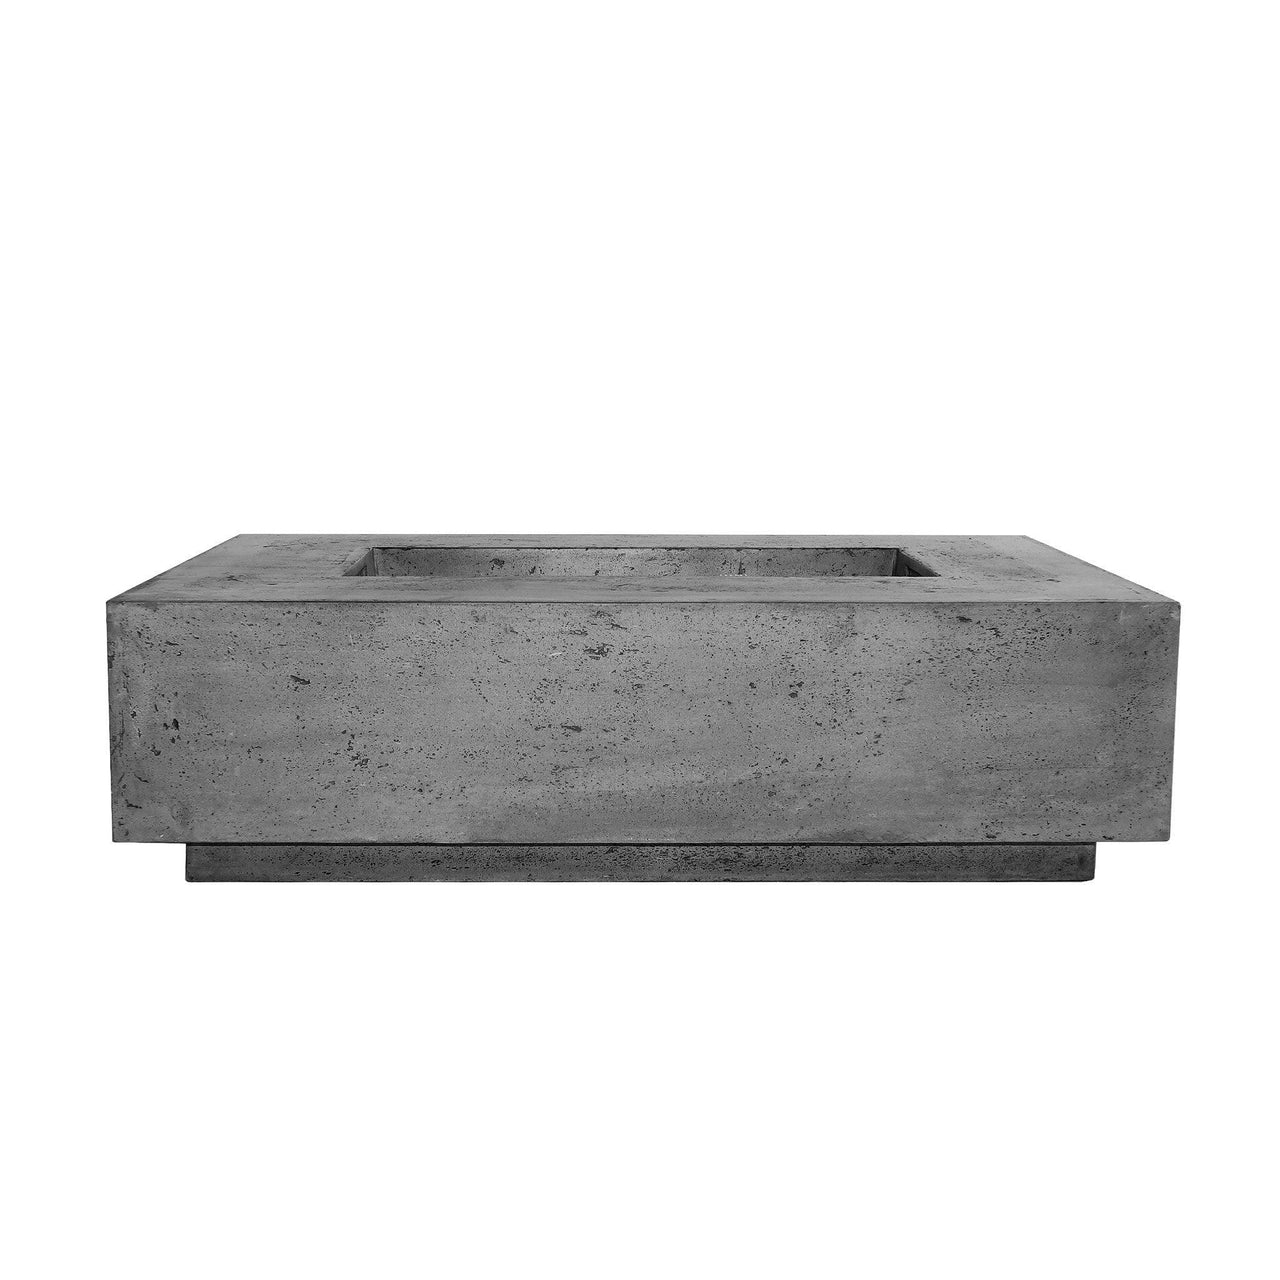 Prism Hardscapes - Tavola Series 1 Rectangular Concrete Fire Pit Table - Fire Pit Stock